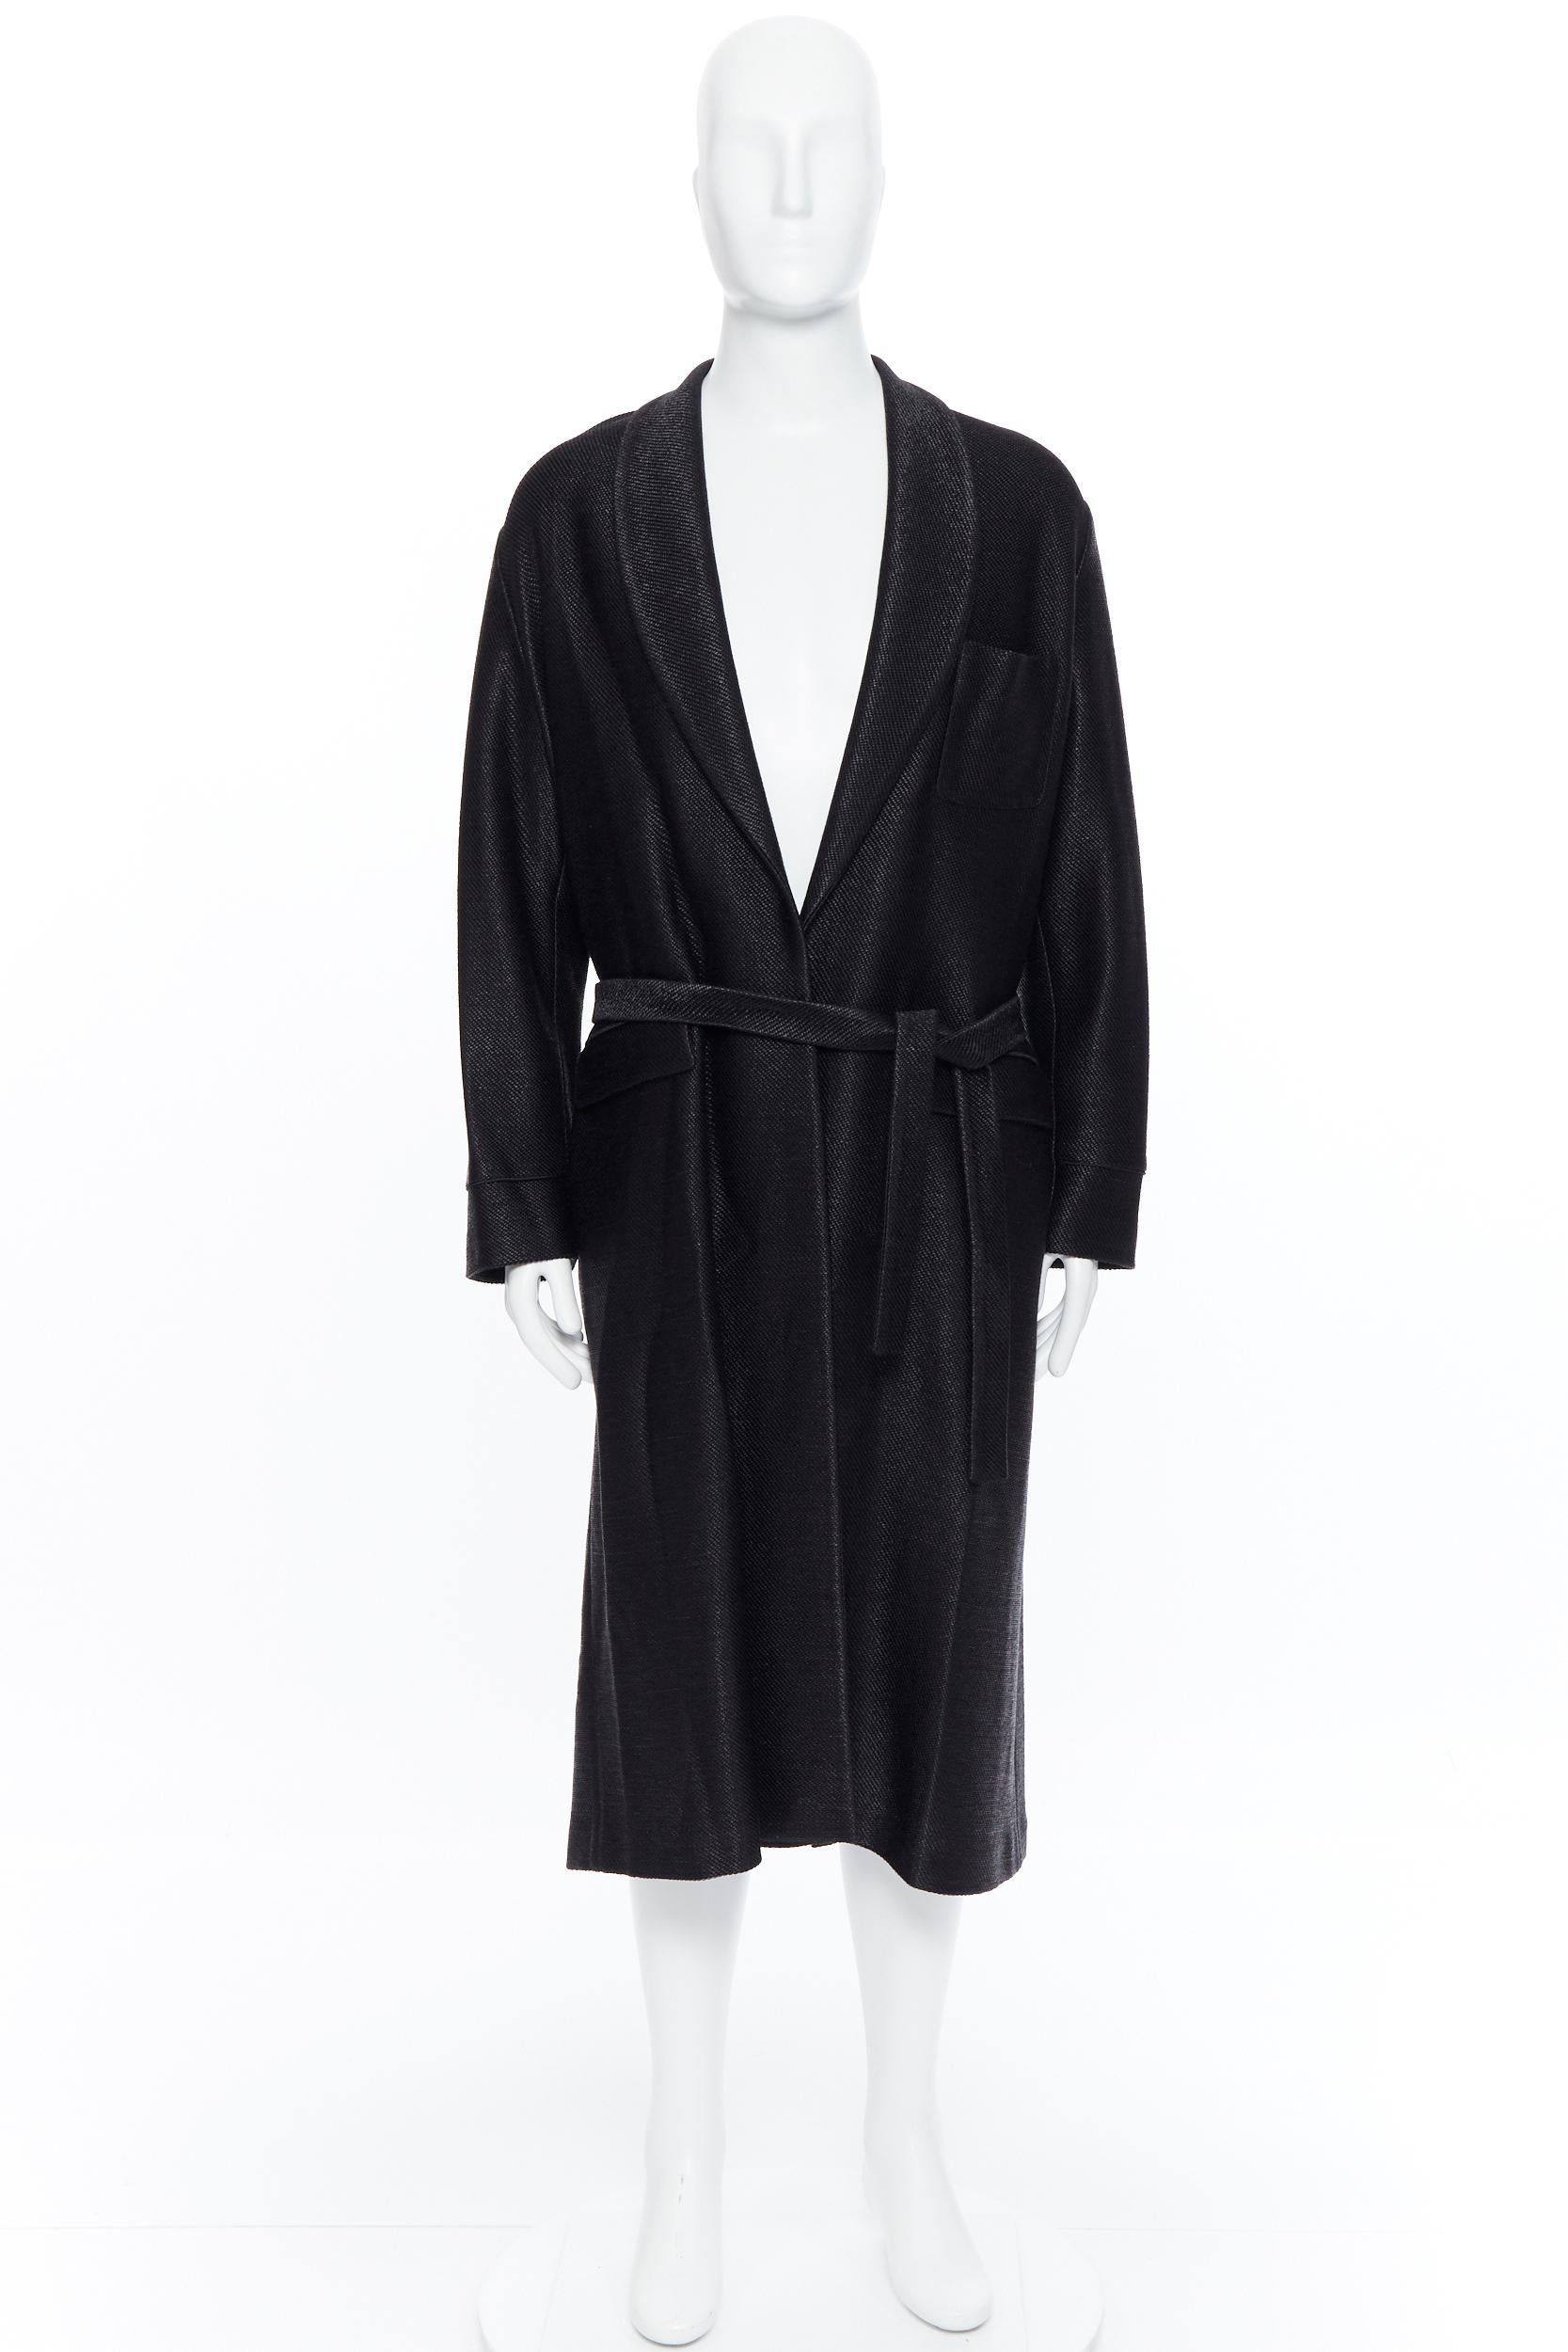 Black new LA PERLA MENSWEAR Runway black lacquered raffia weave belted robe coat M